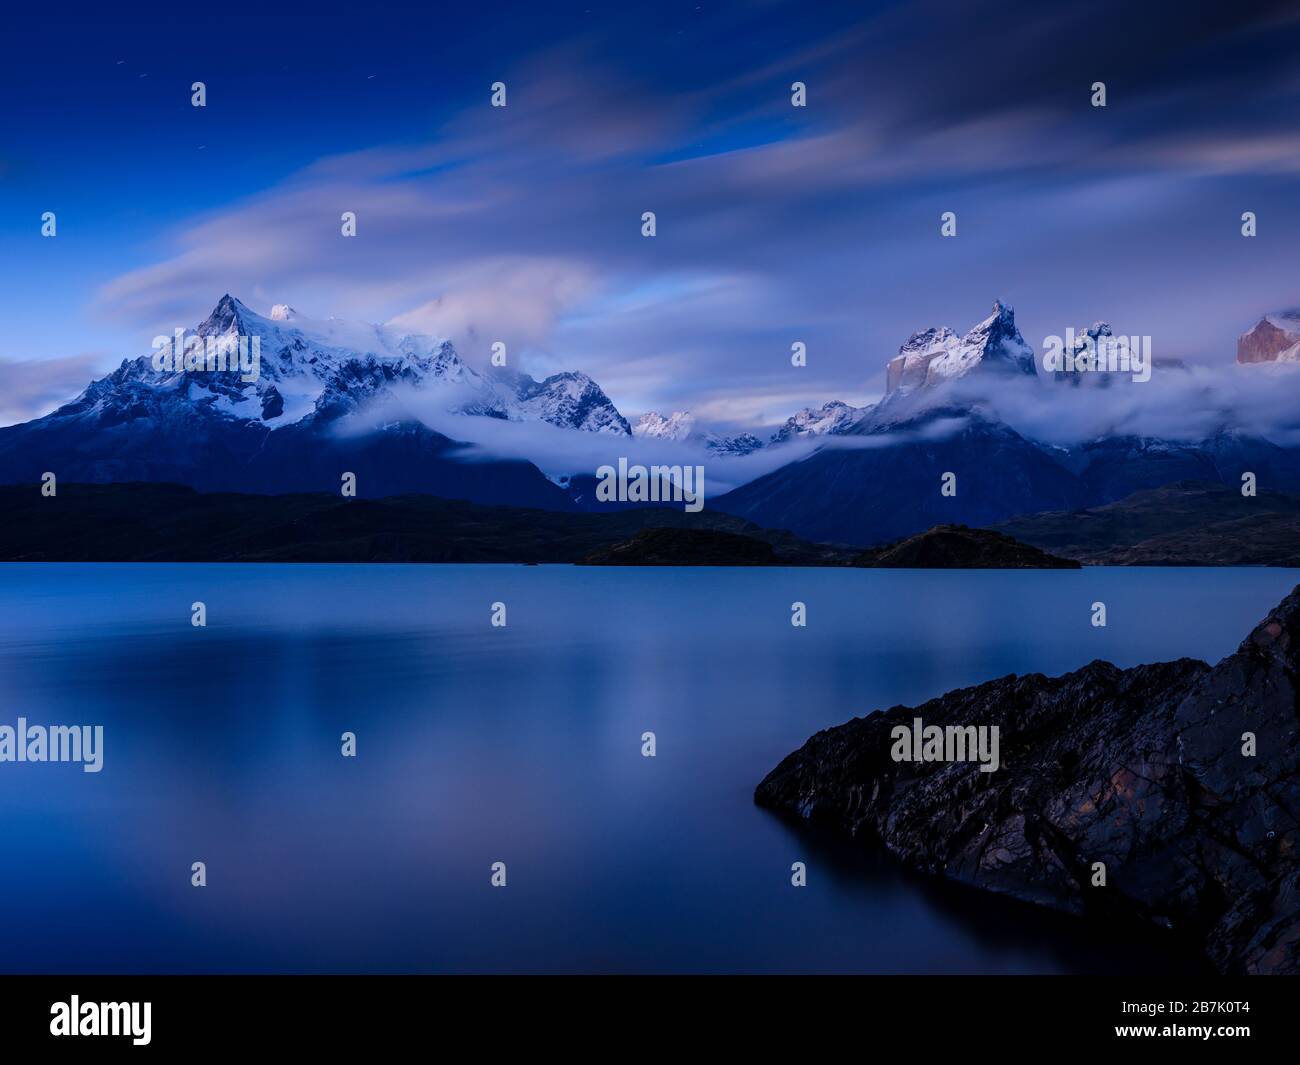 PARCO NAZIONALE TORRES DEL PAINE, CILE - CIRCA FEBBRAIO 2019: Notte sul Lago Pehoe nel Parco Nazionale Torres del Paine, Cile. Foto Stock